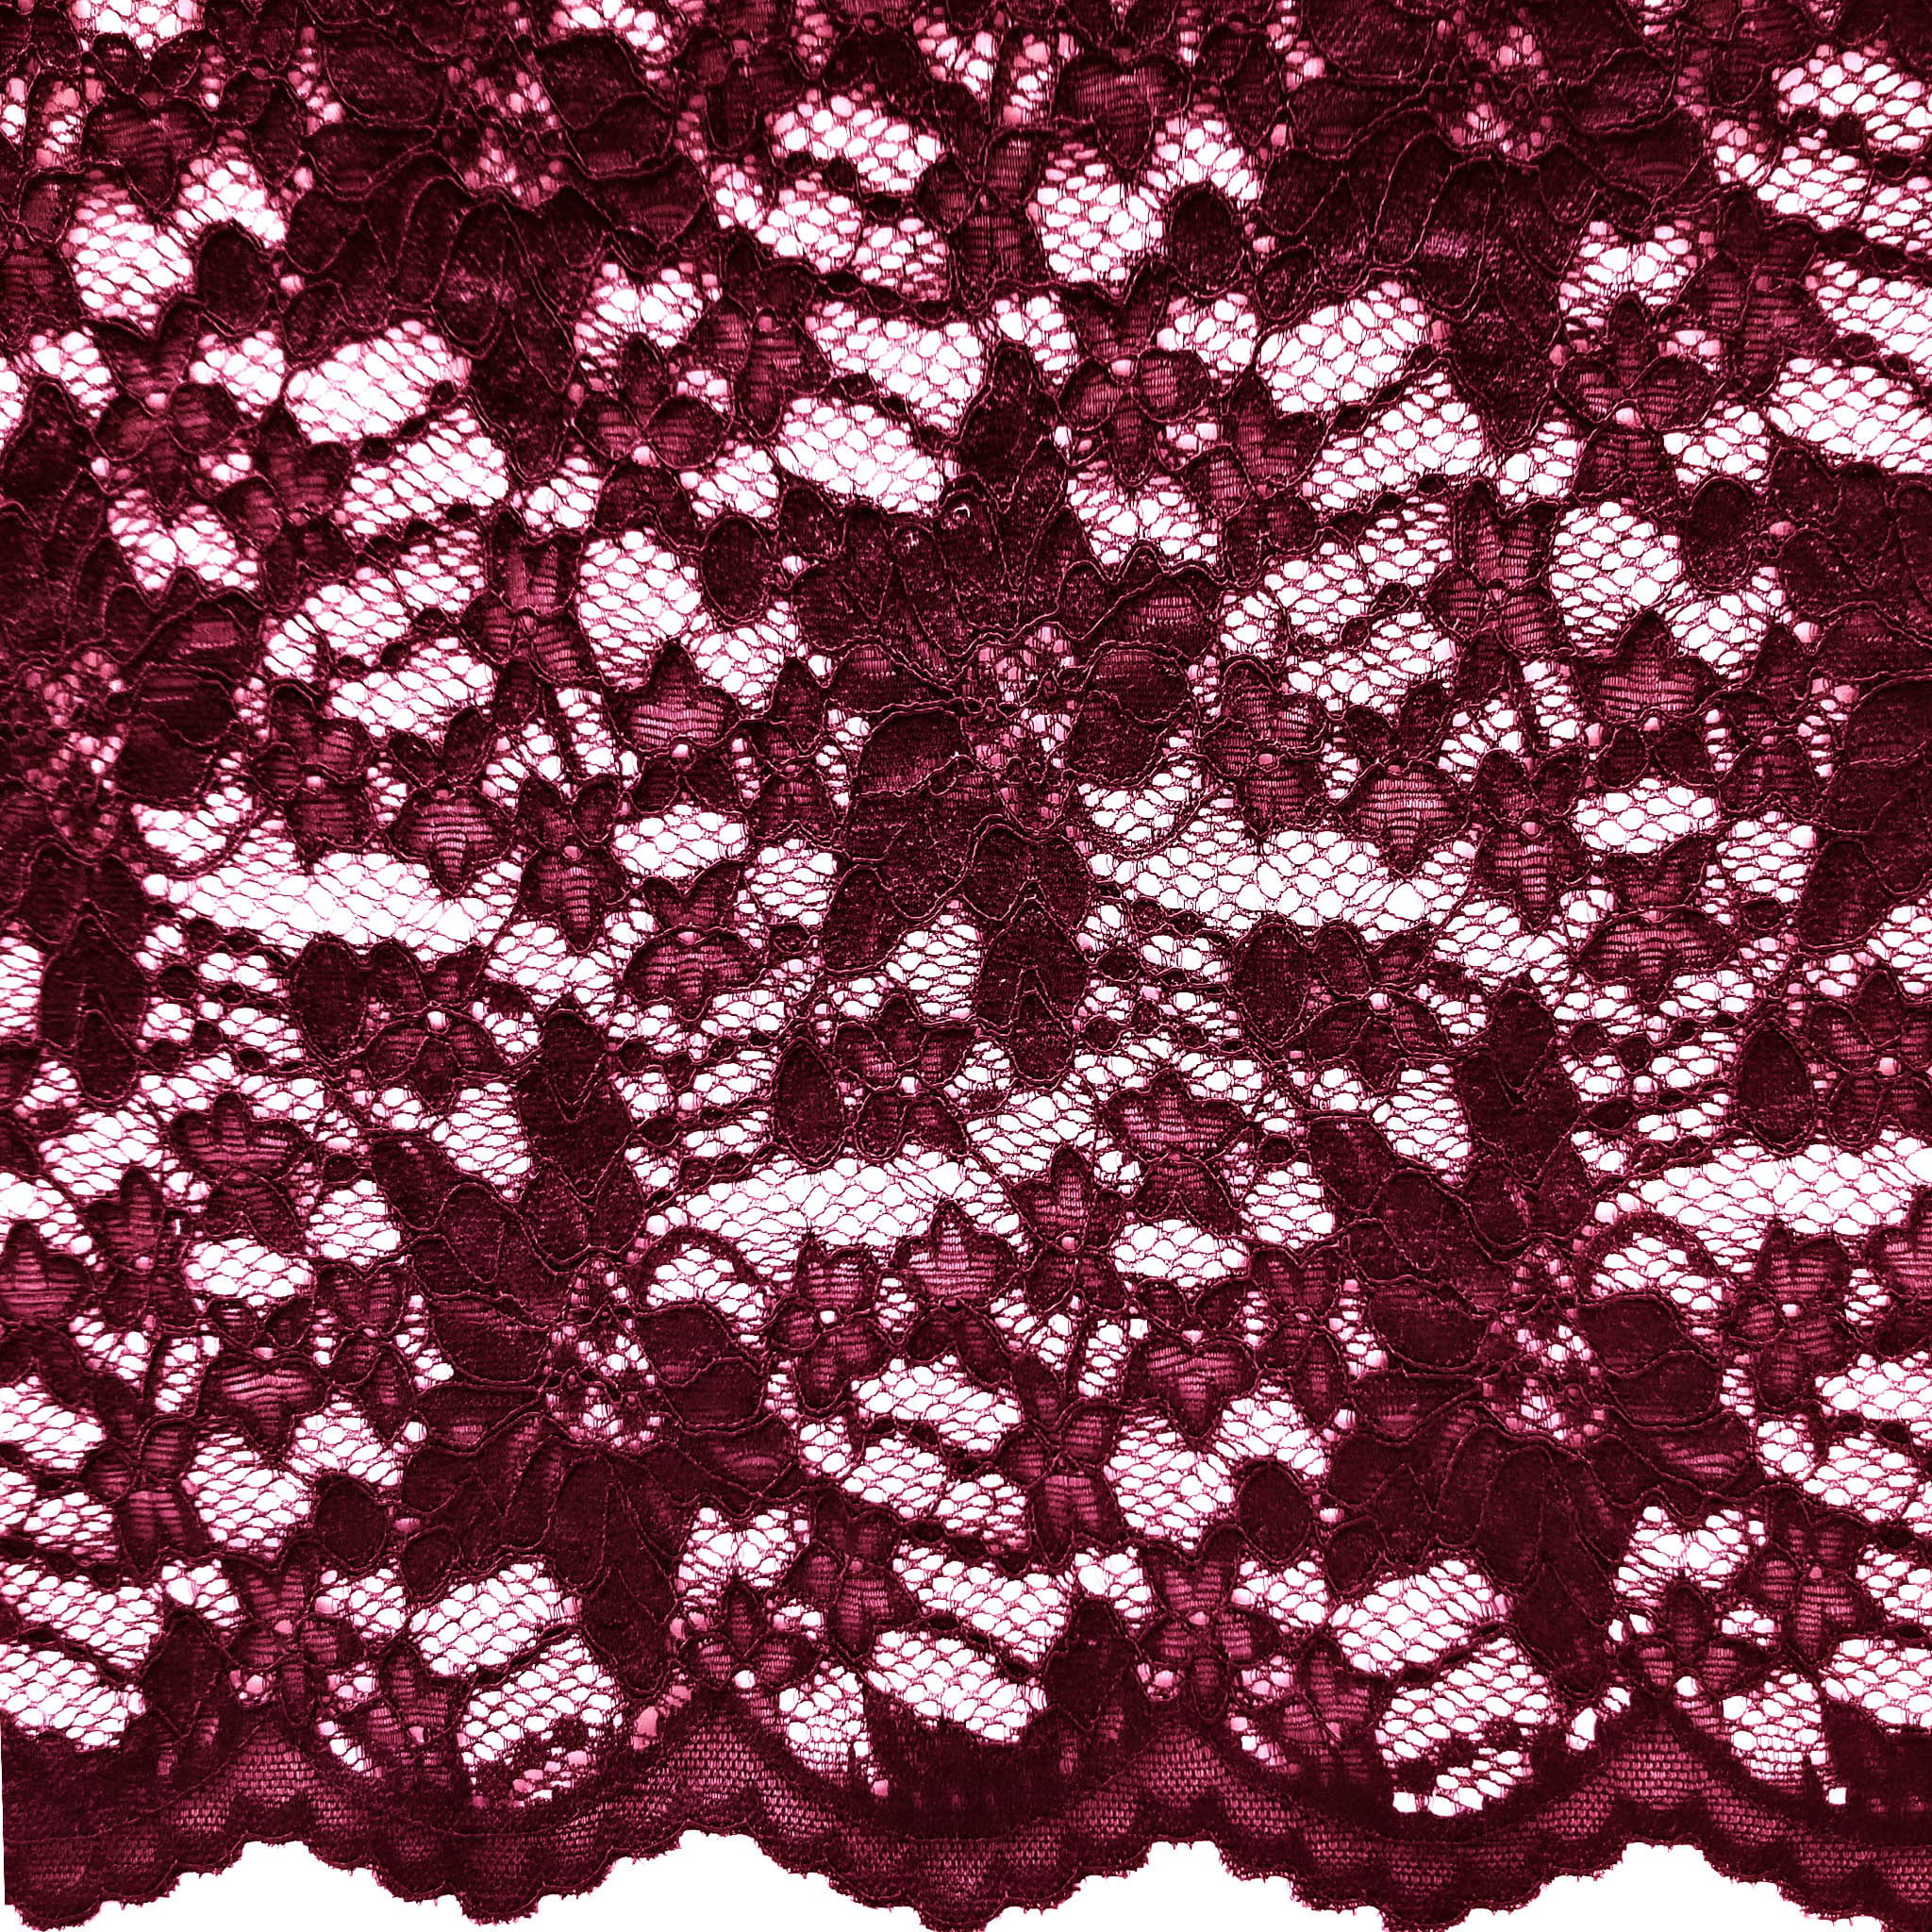 Marsala Burgundy Maroon Scalloped Eyelash Tulle Lace Fabric Floral Pattern 